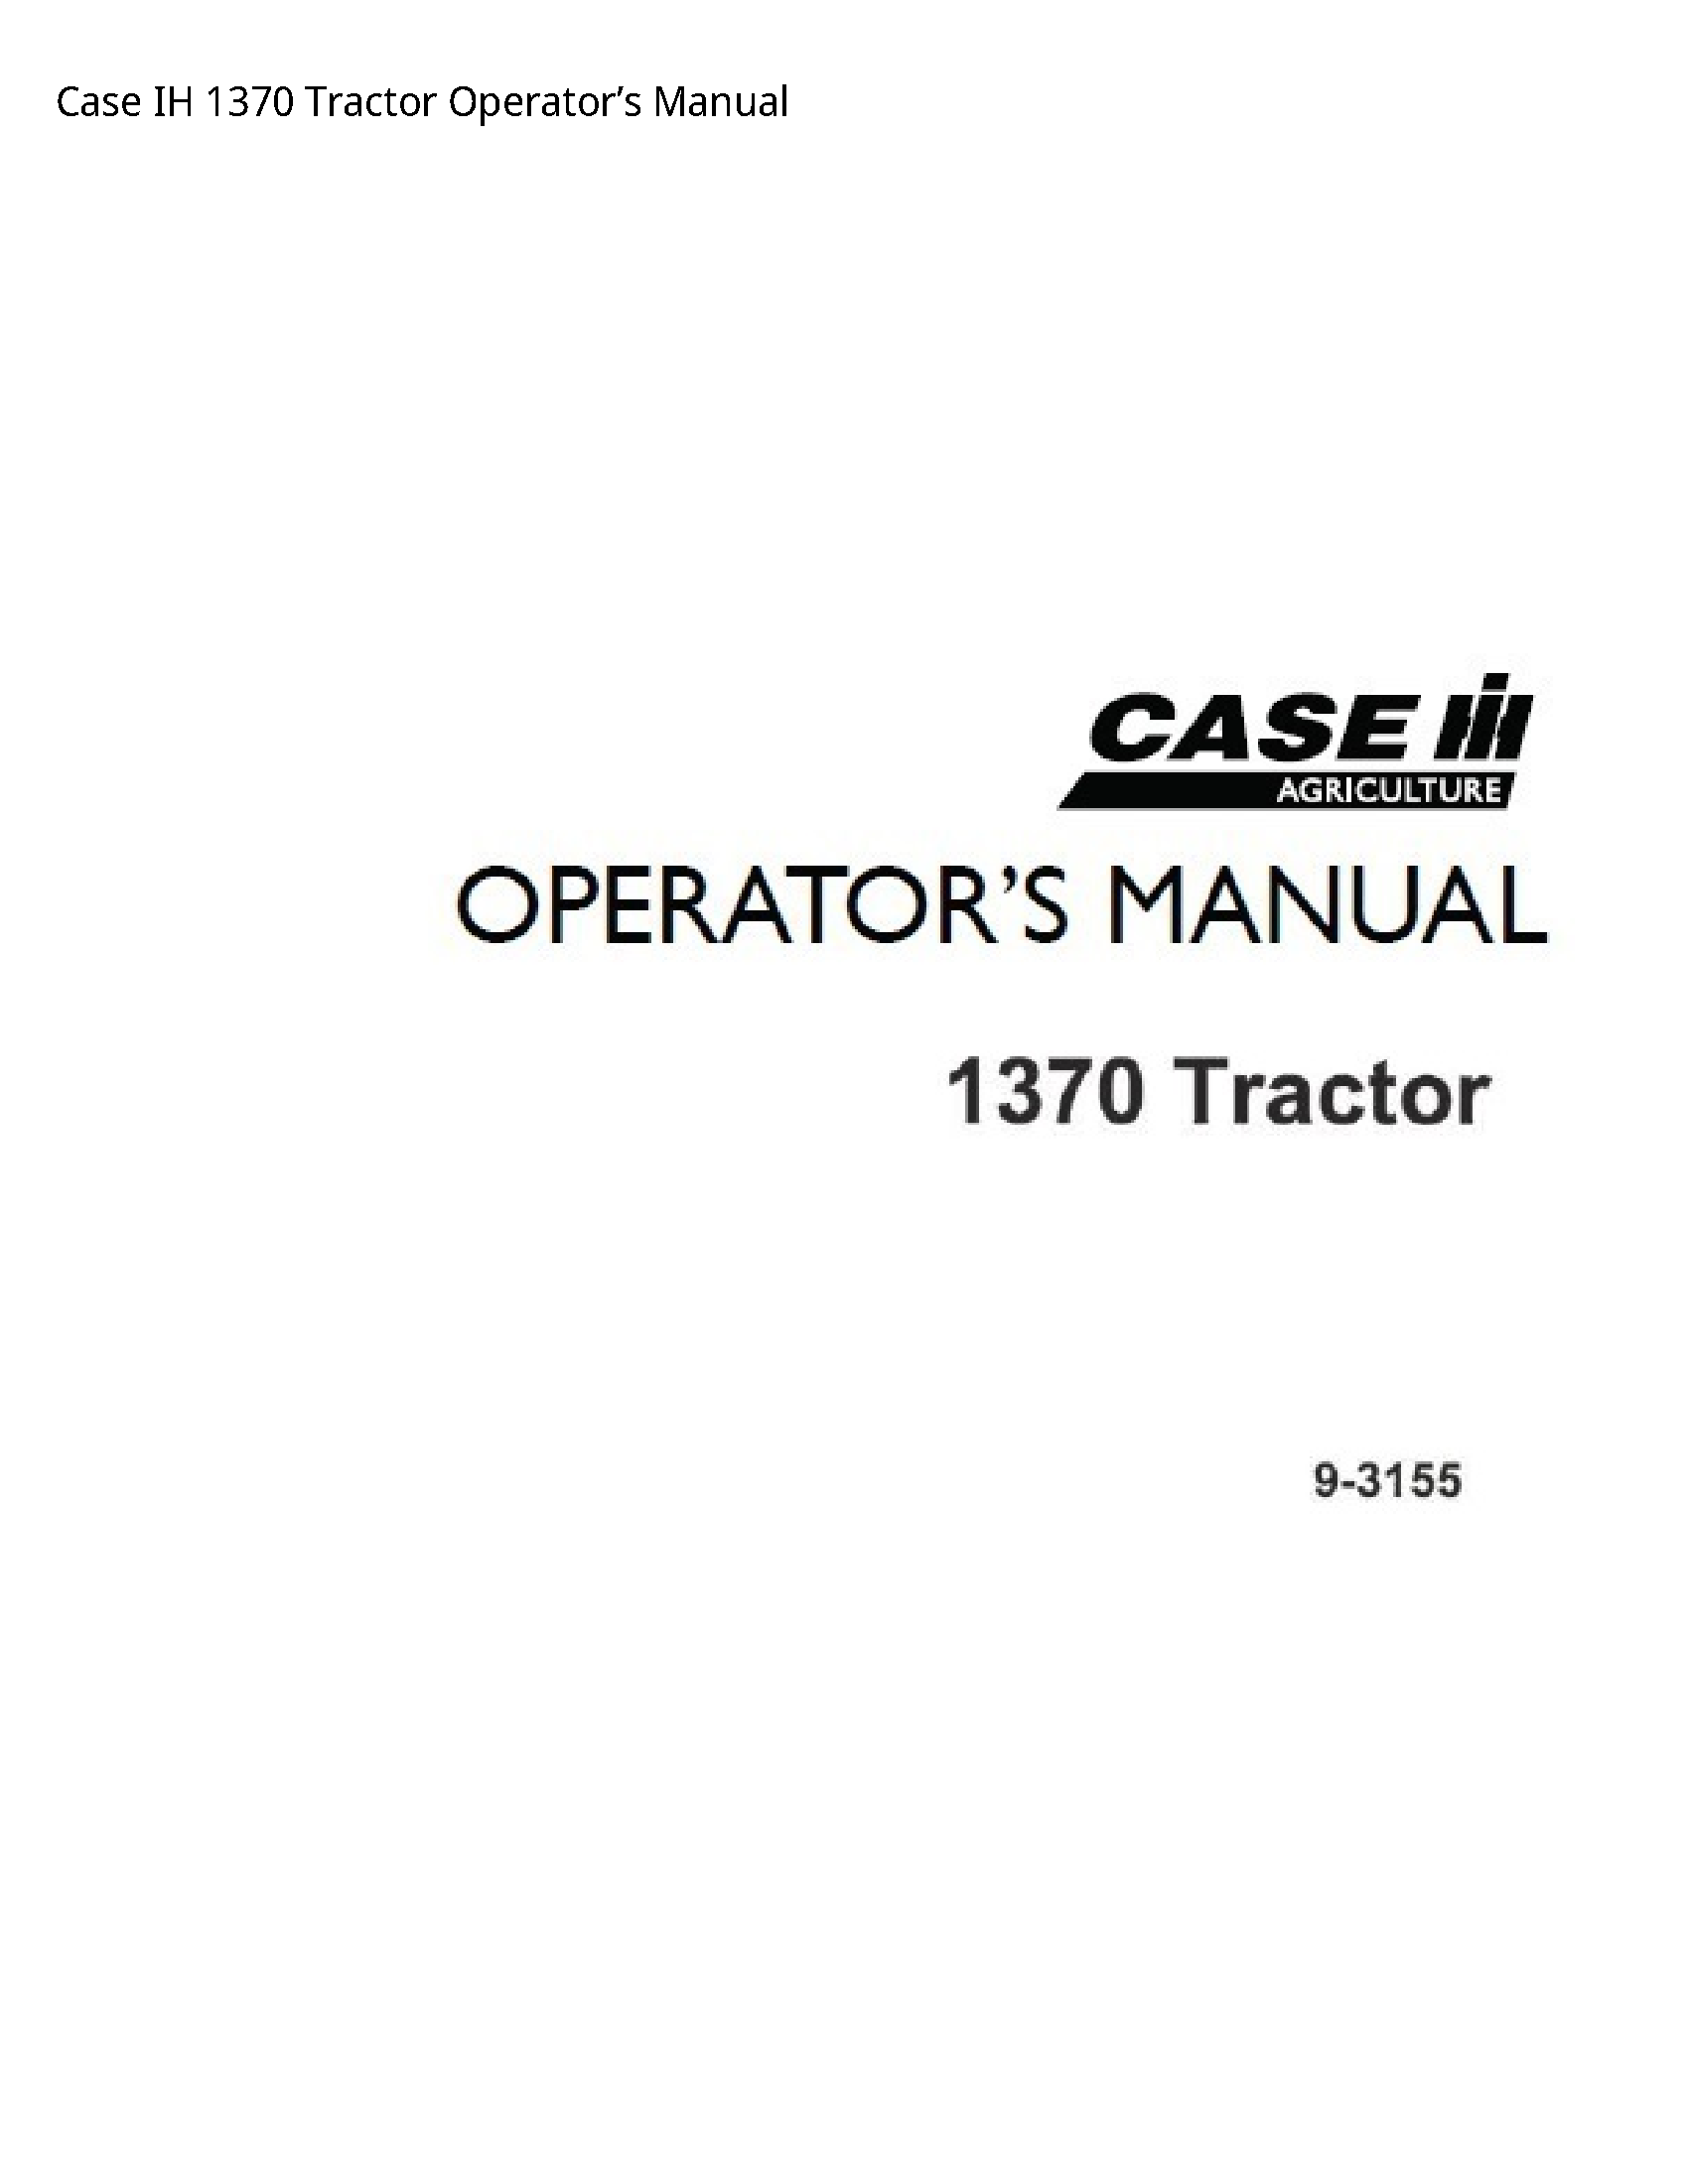 Case/Case IH 1370 IH Tractor Operator’s manual